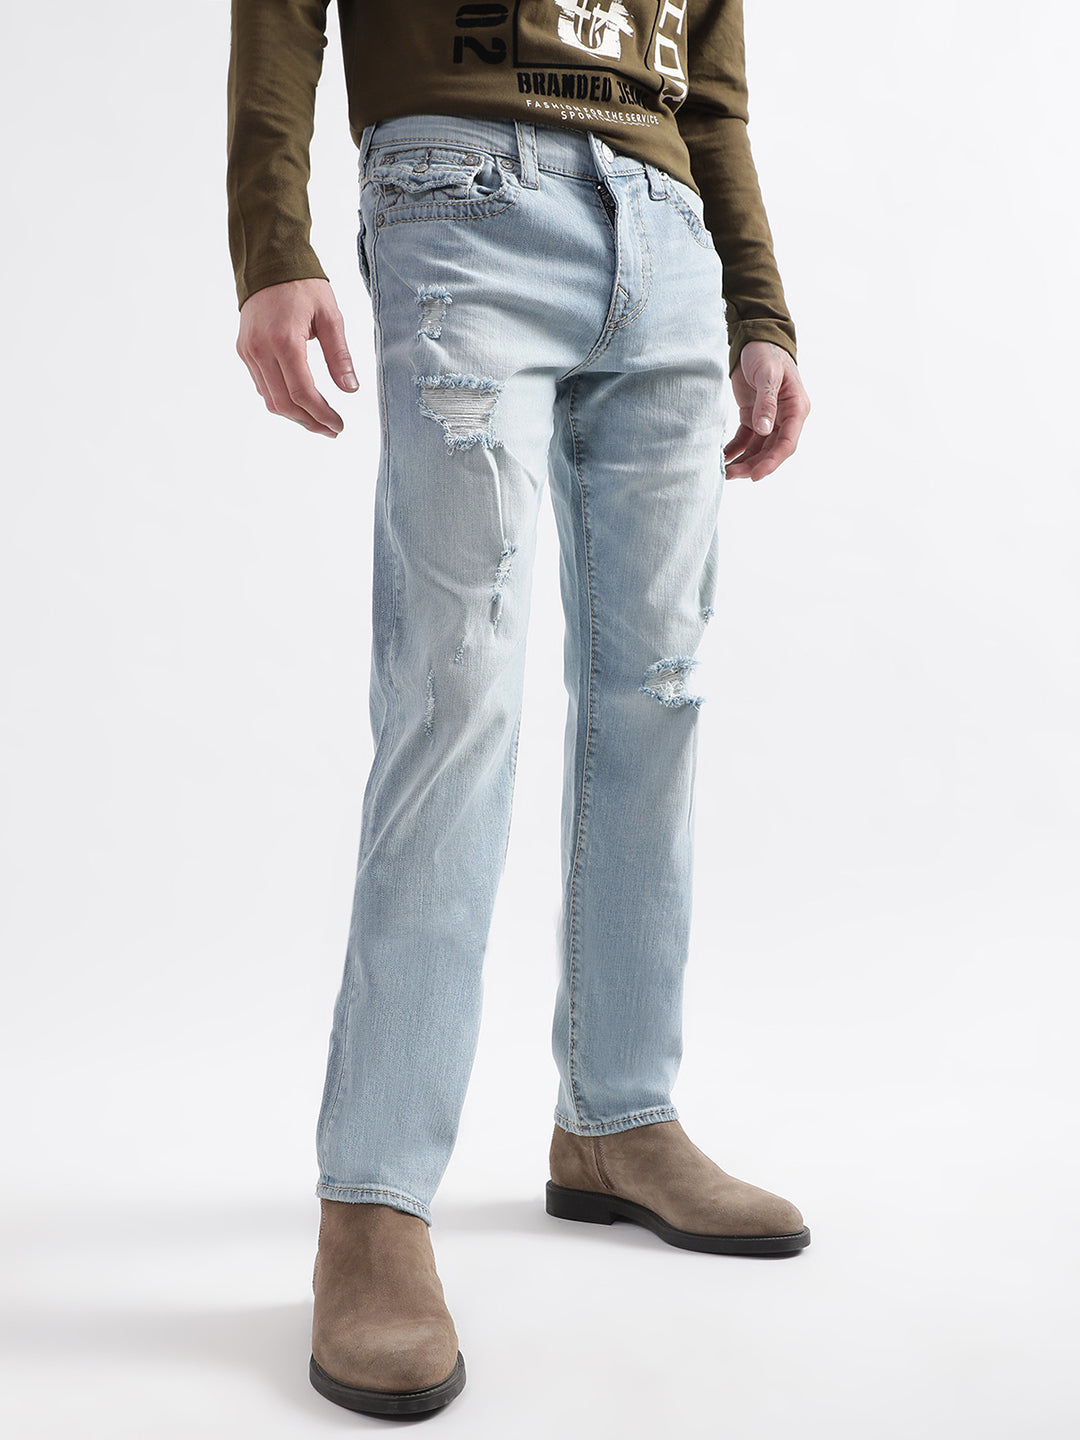 Men's Ripped Jeans Stretch Skinny Slim Denim Pants Washed Blue Boys Jean  Trouser | eBay